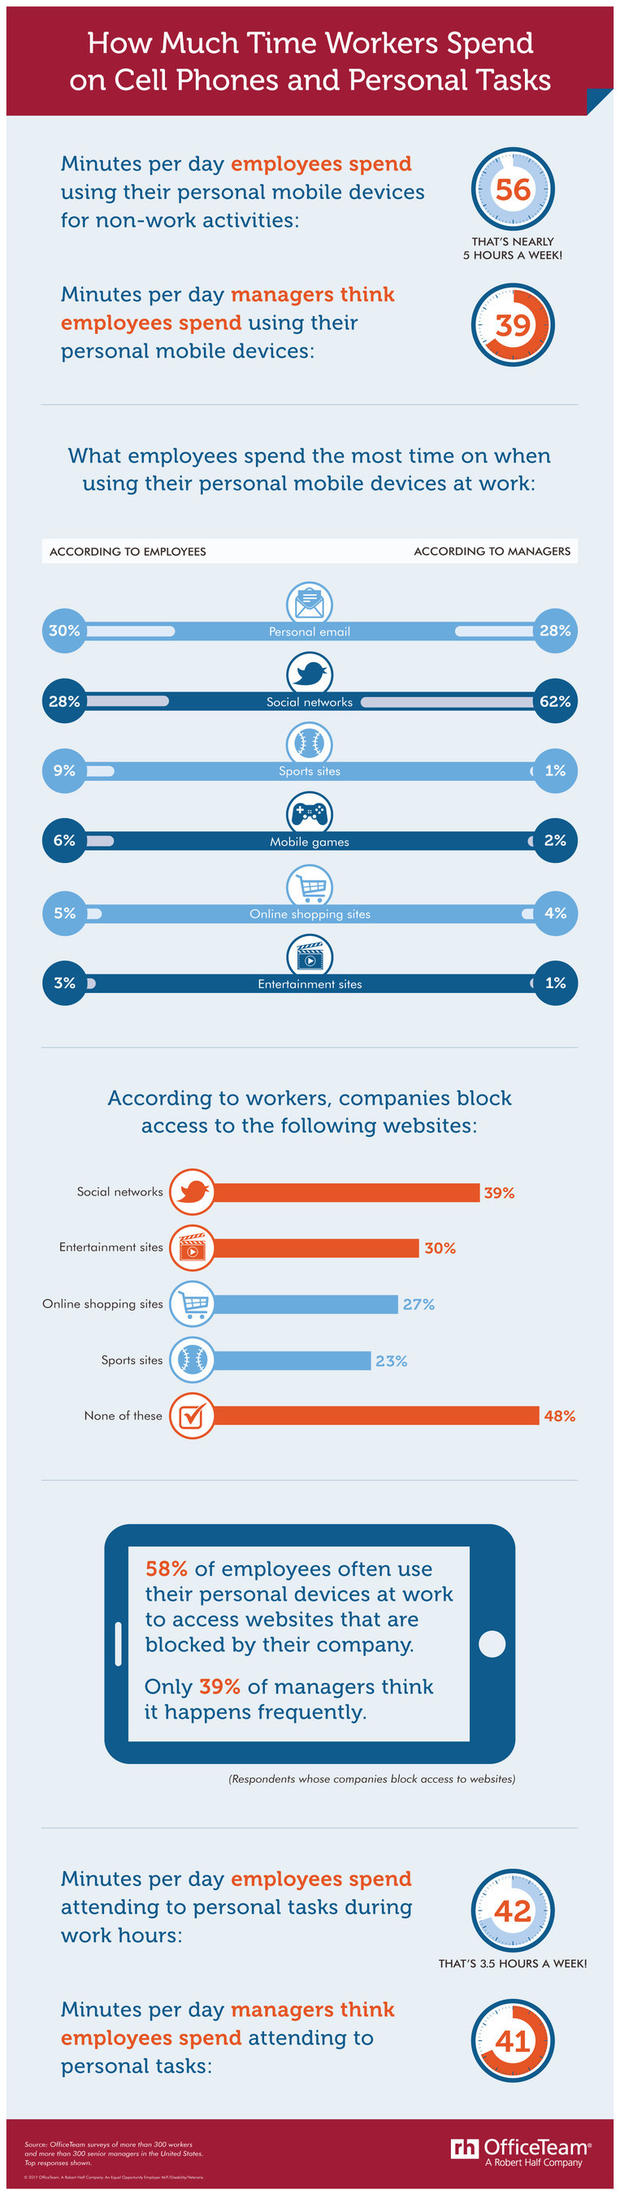 OfficeTeam Infographic 